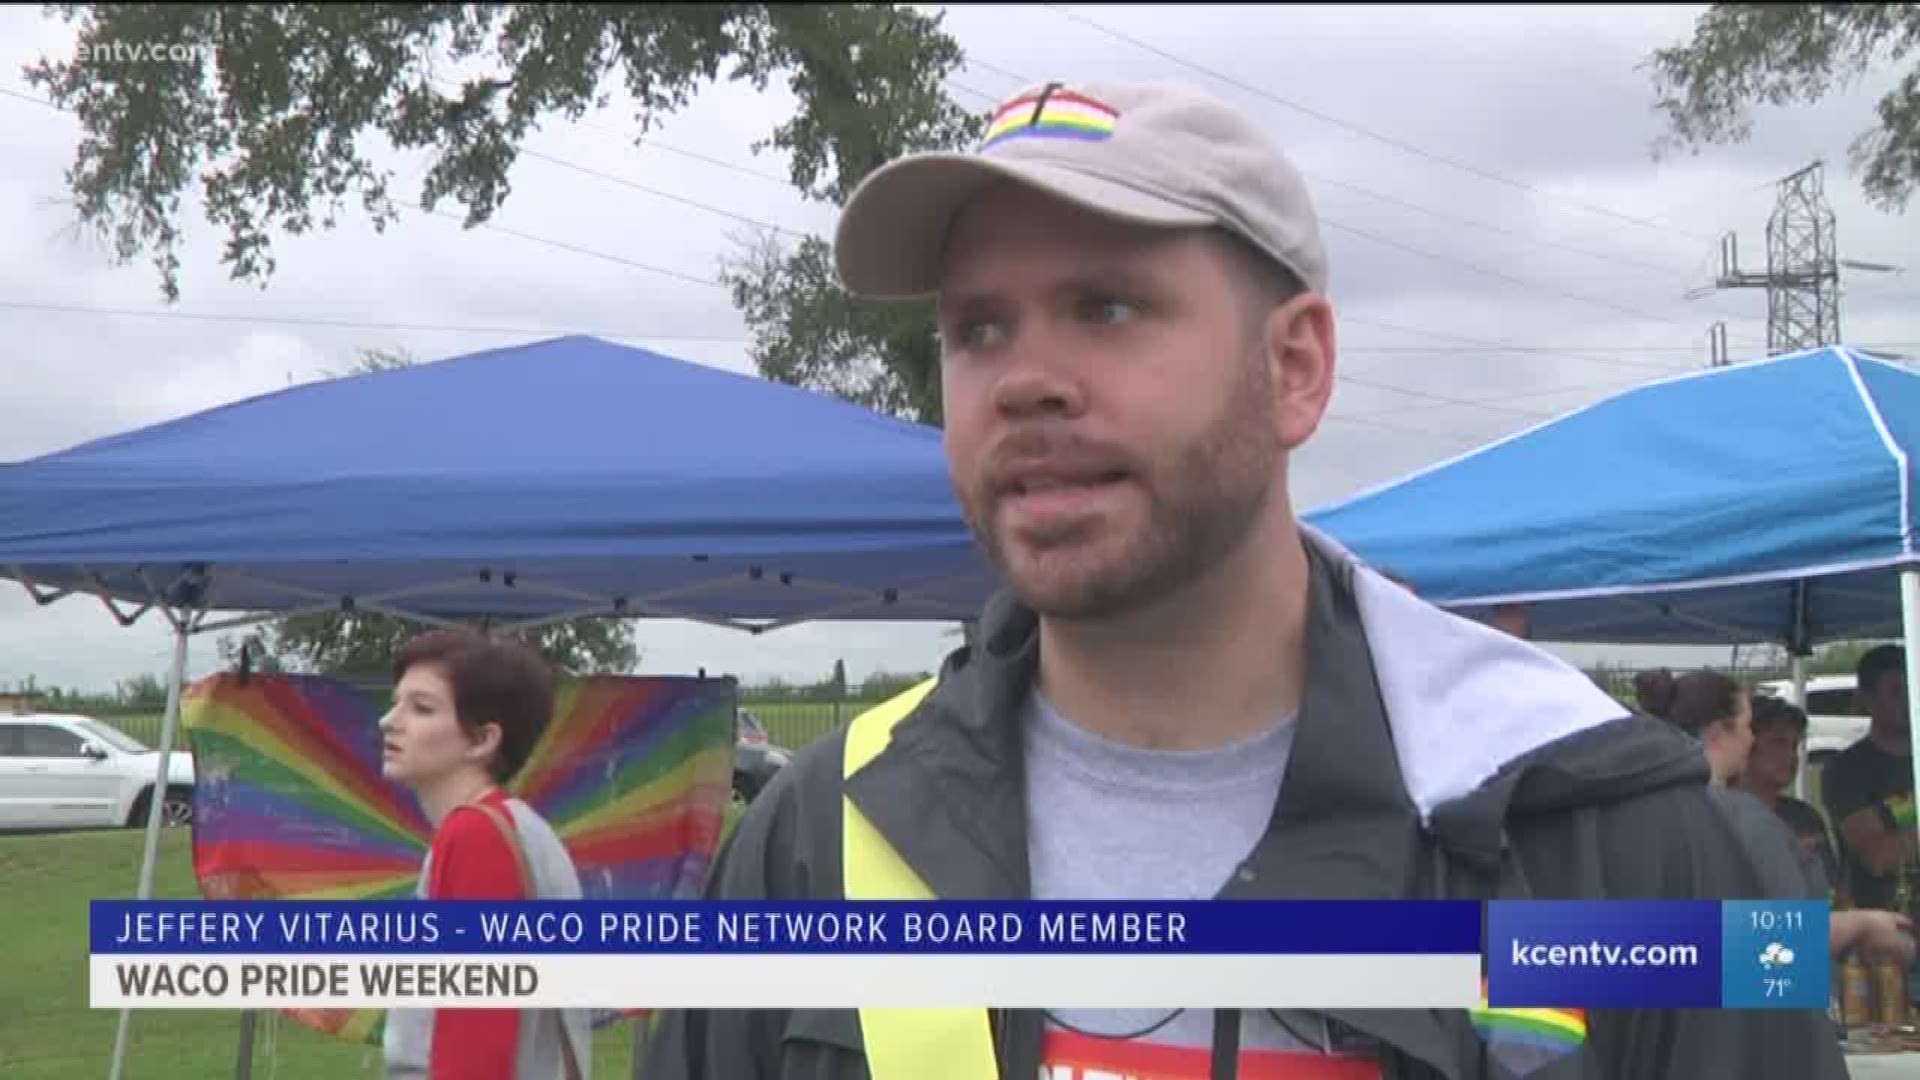 Waco's LGBTQ community came together to celebrate Waco Pride Weekend.